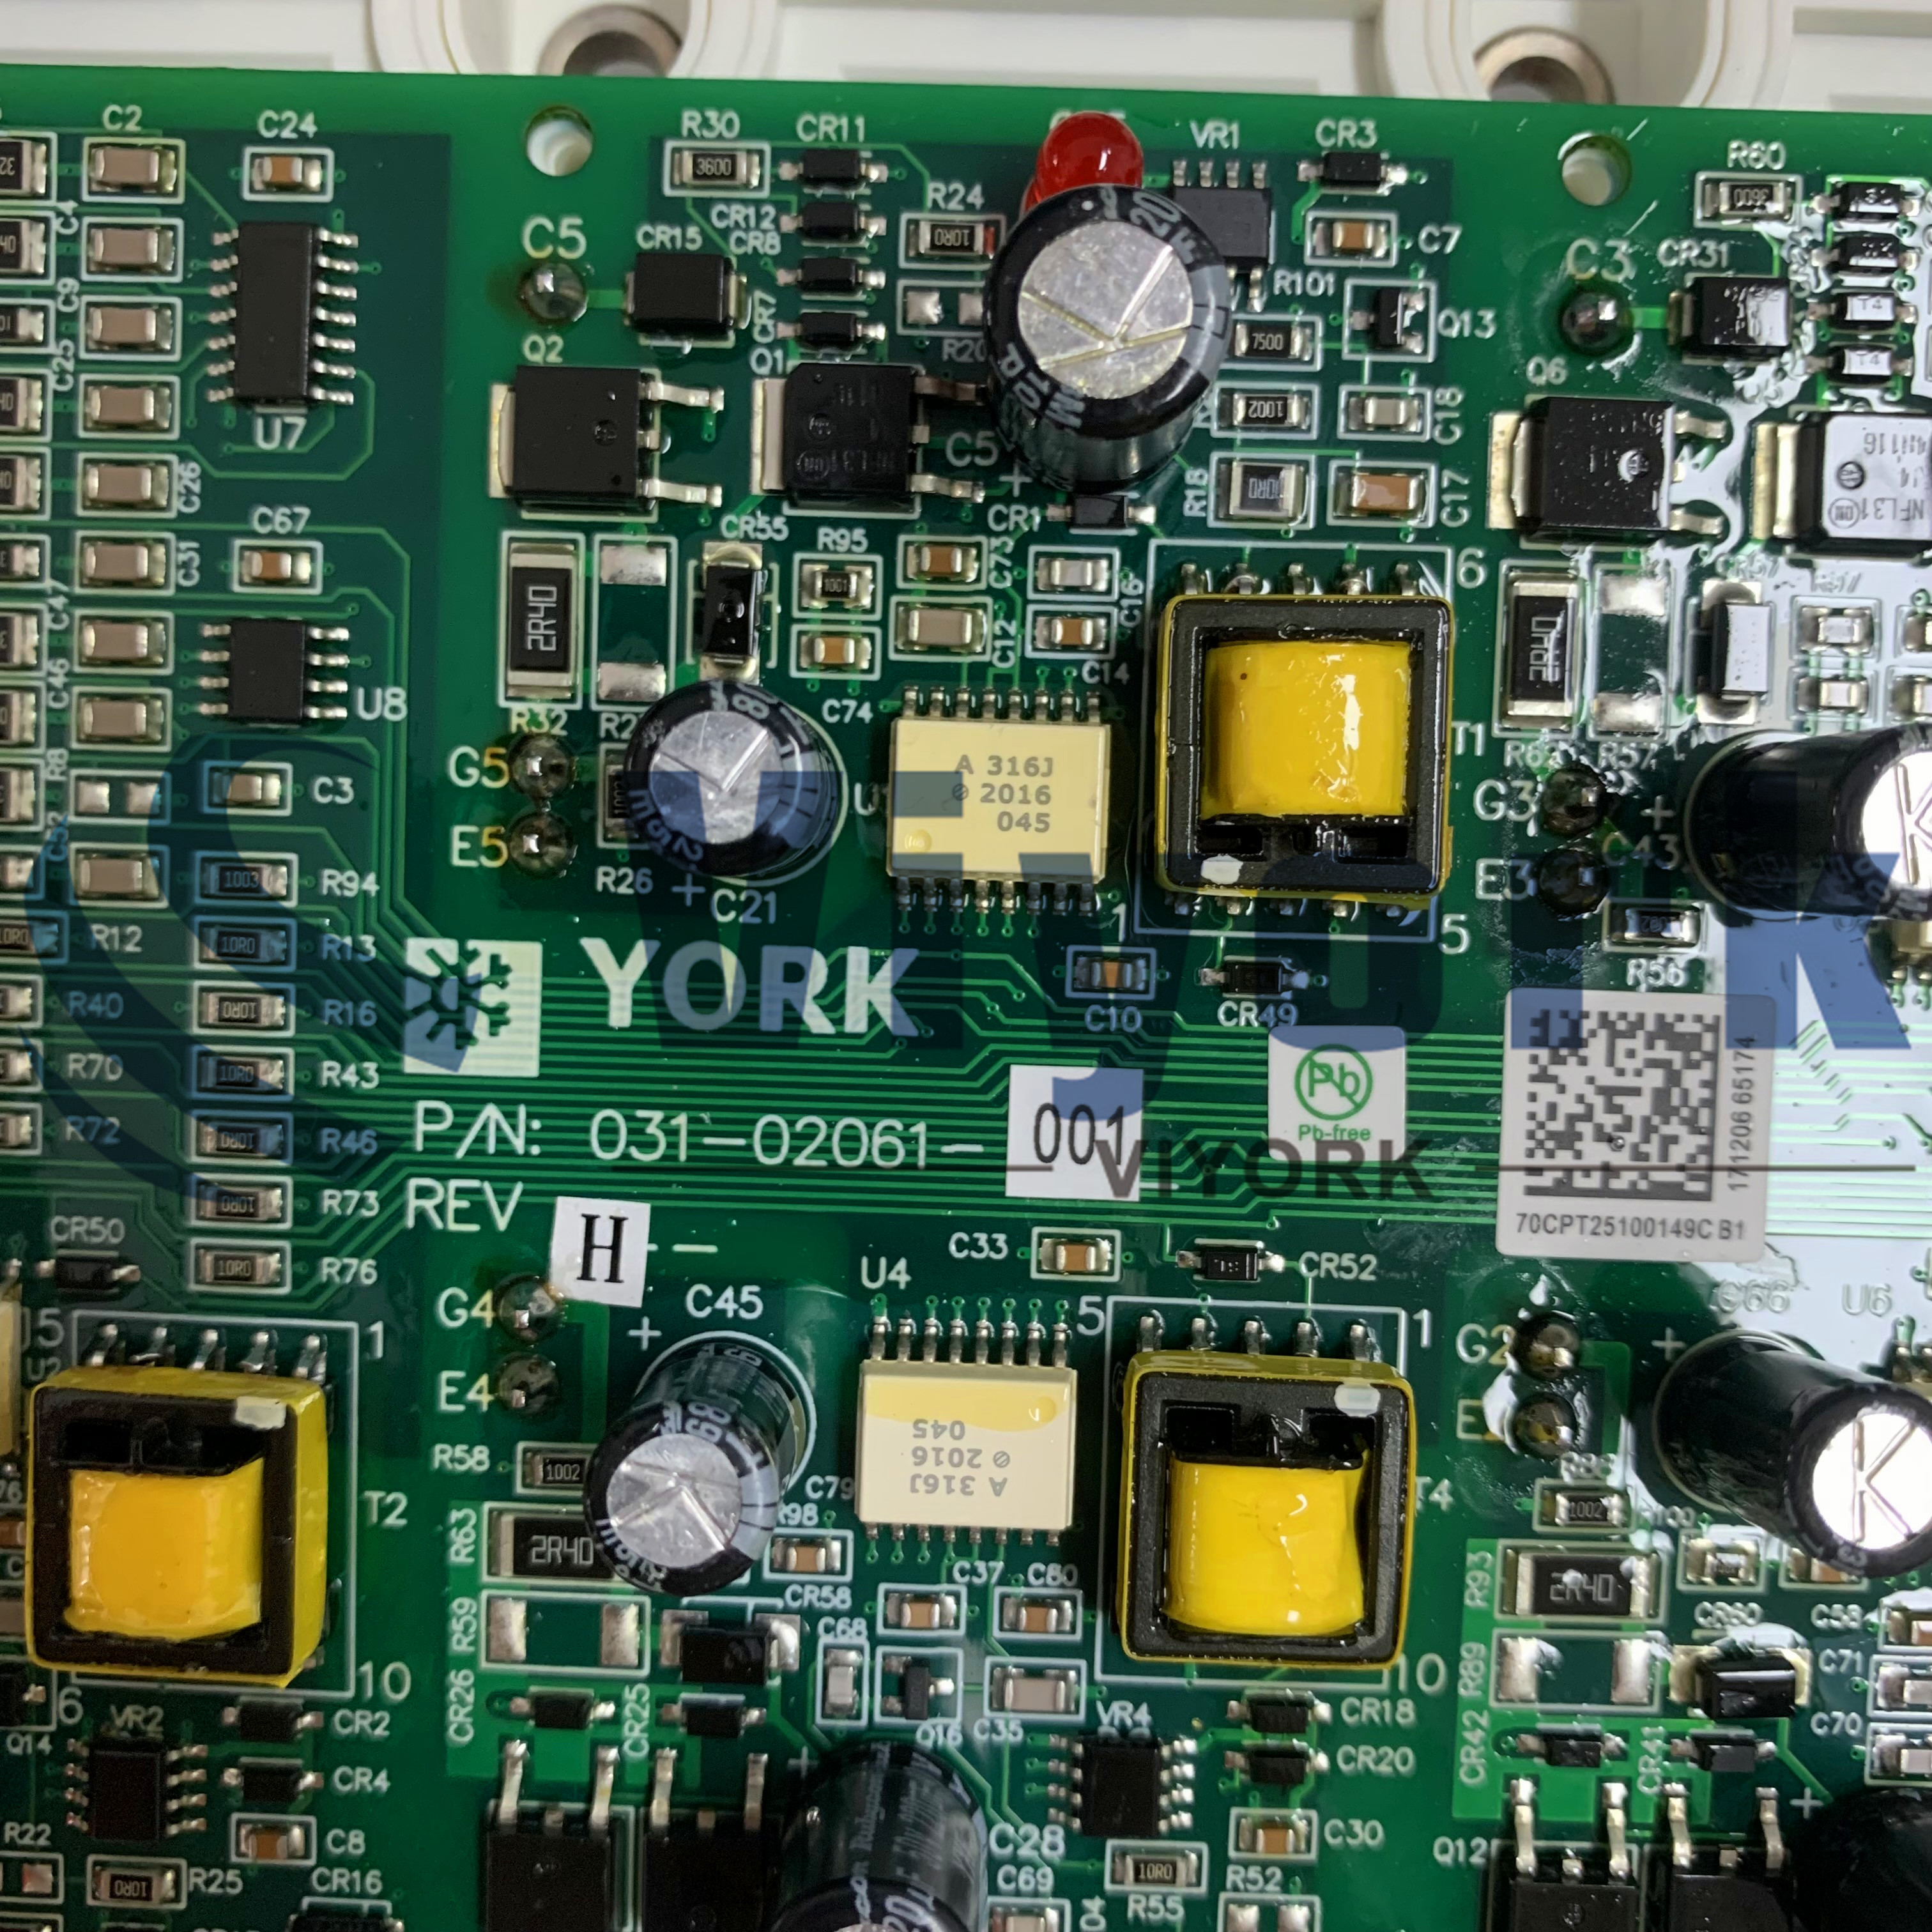 YORK 031-02061-001 PC BOARD CONTROL MODULE SCREW TERMINALS STATUS LEDS